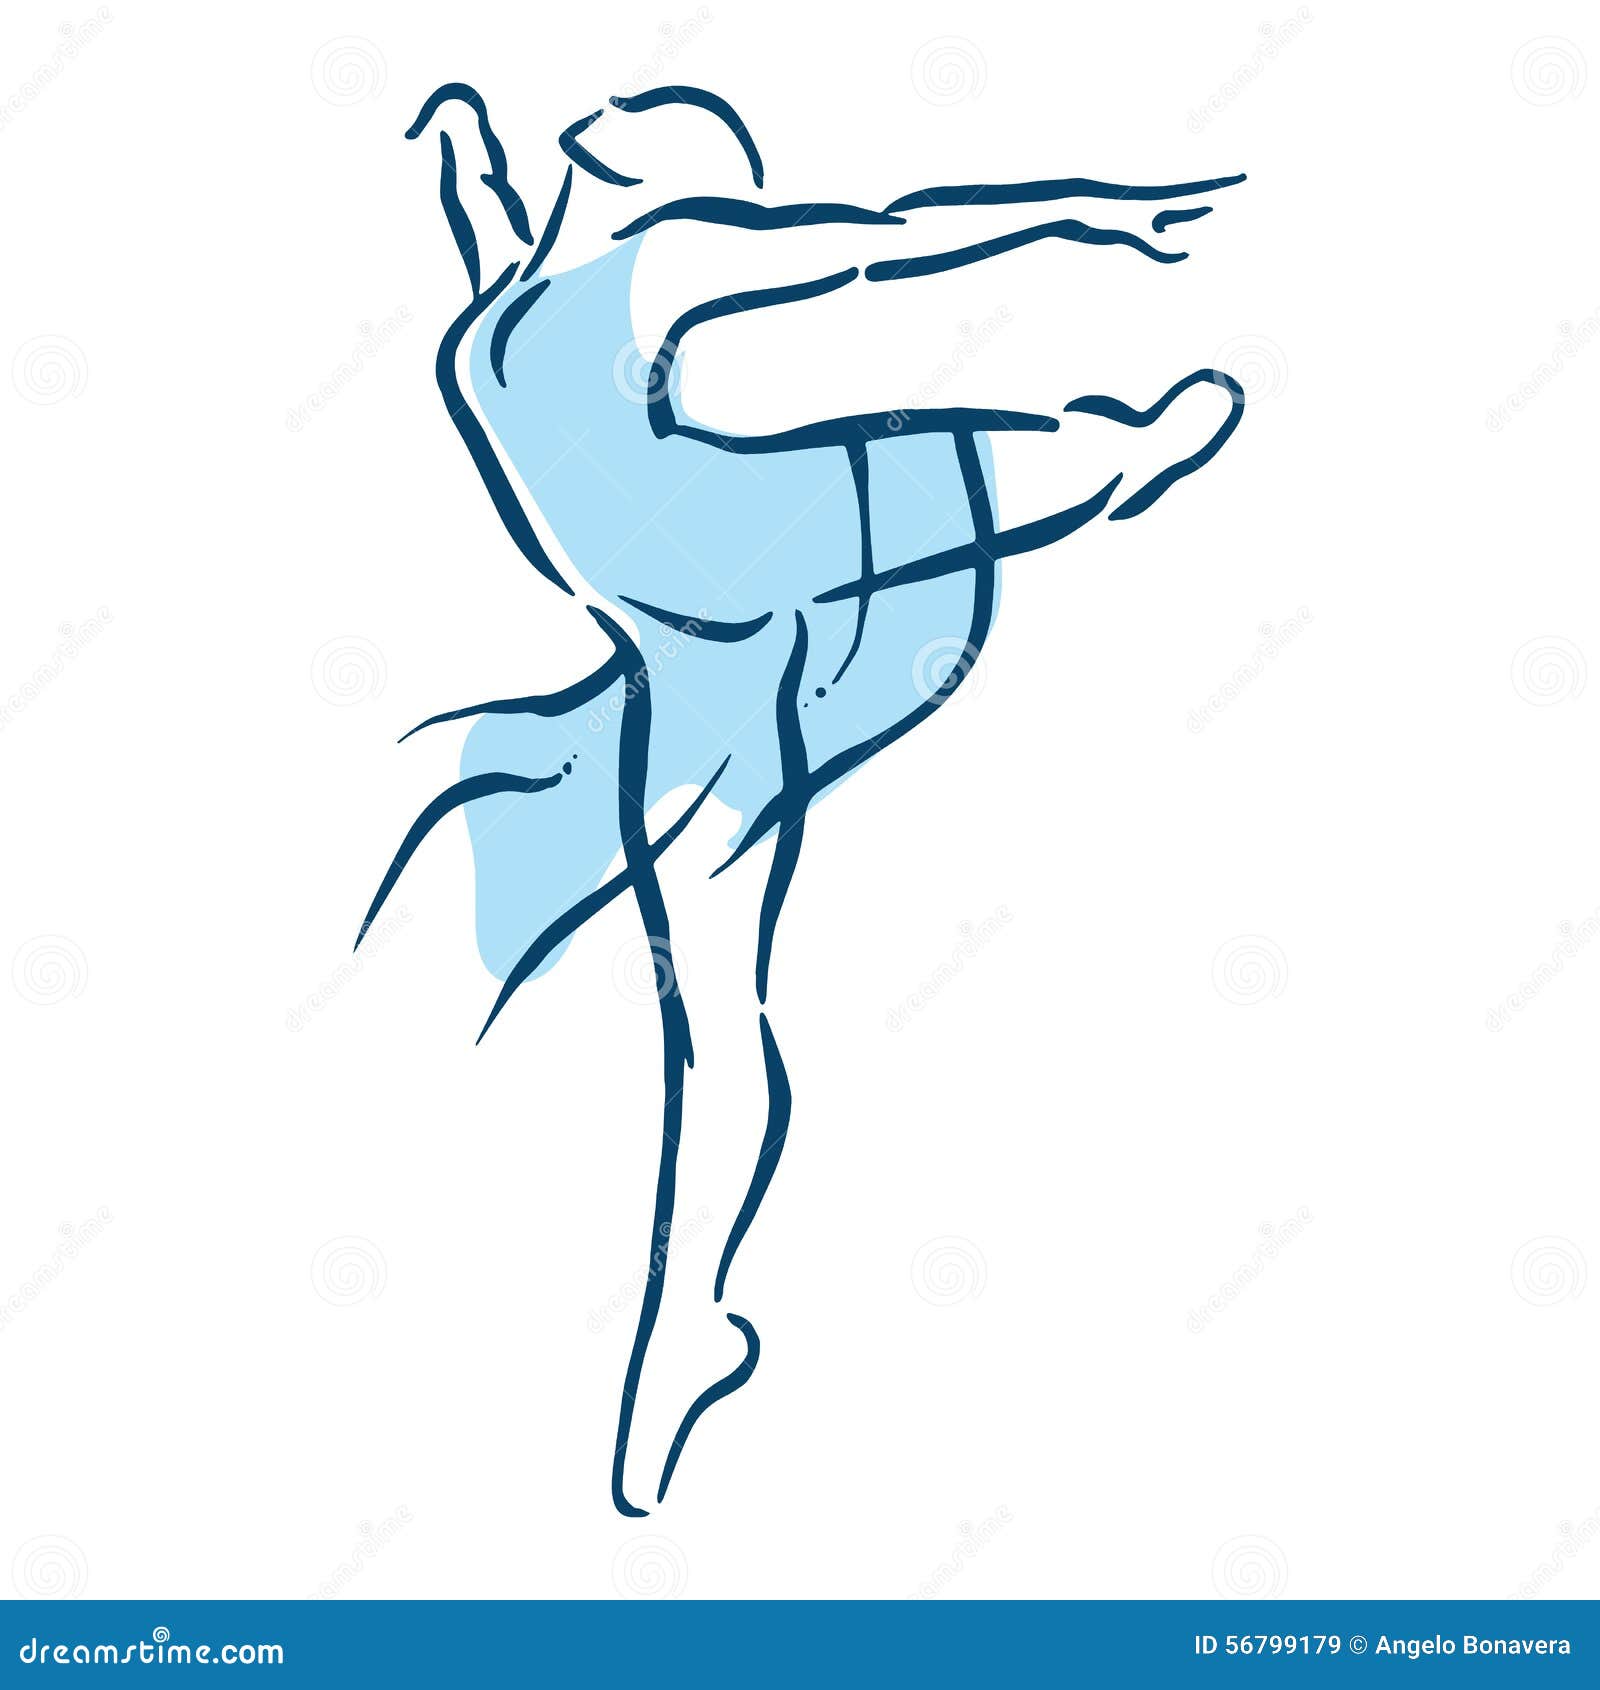 Ballet dancer stock illustration. Illustration of artwork - 56799179